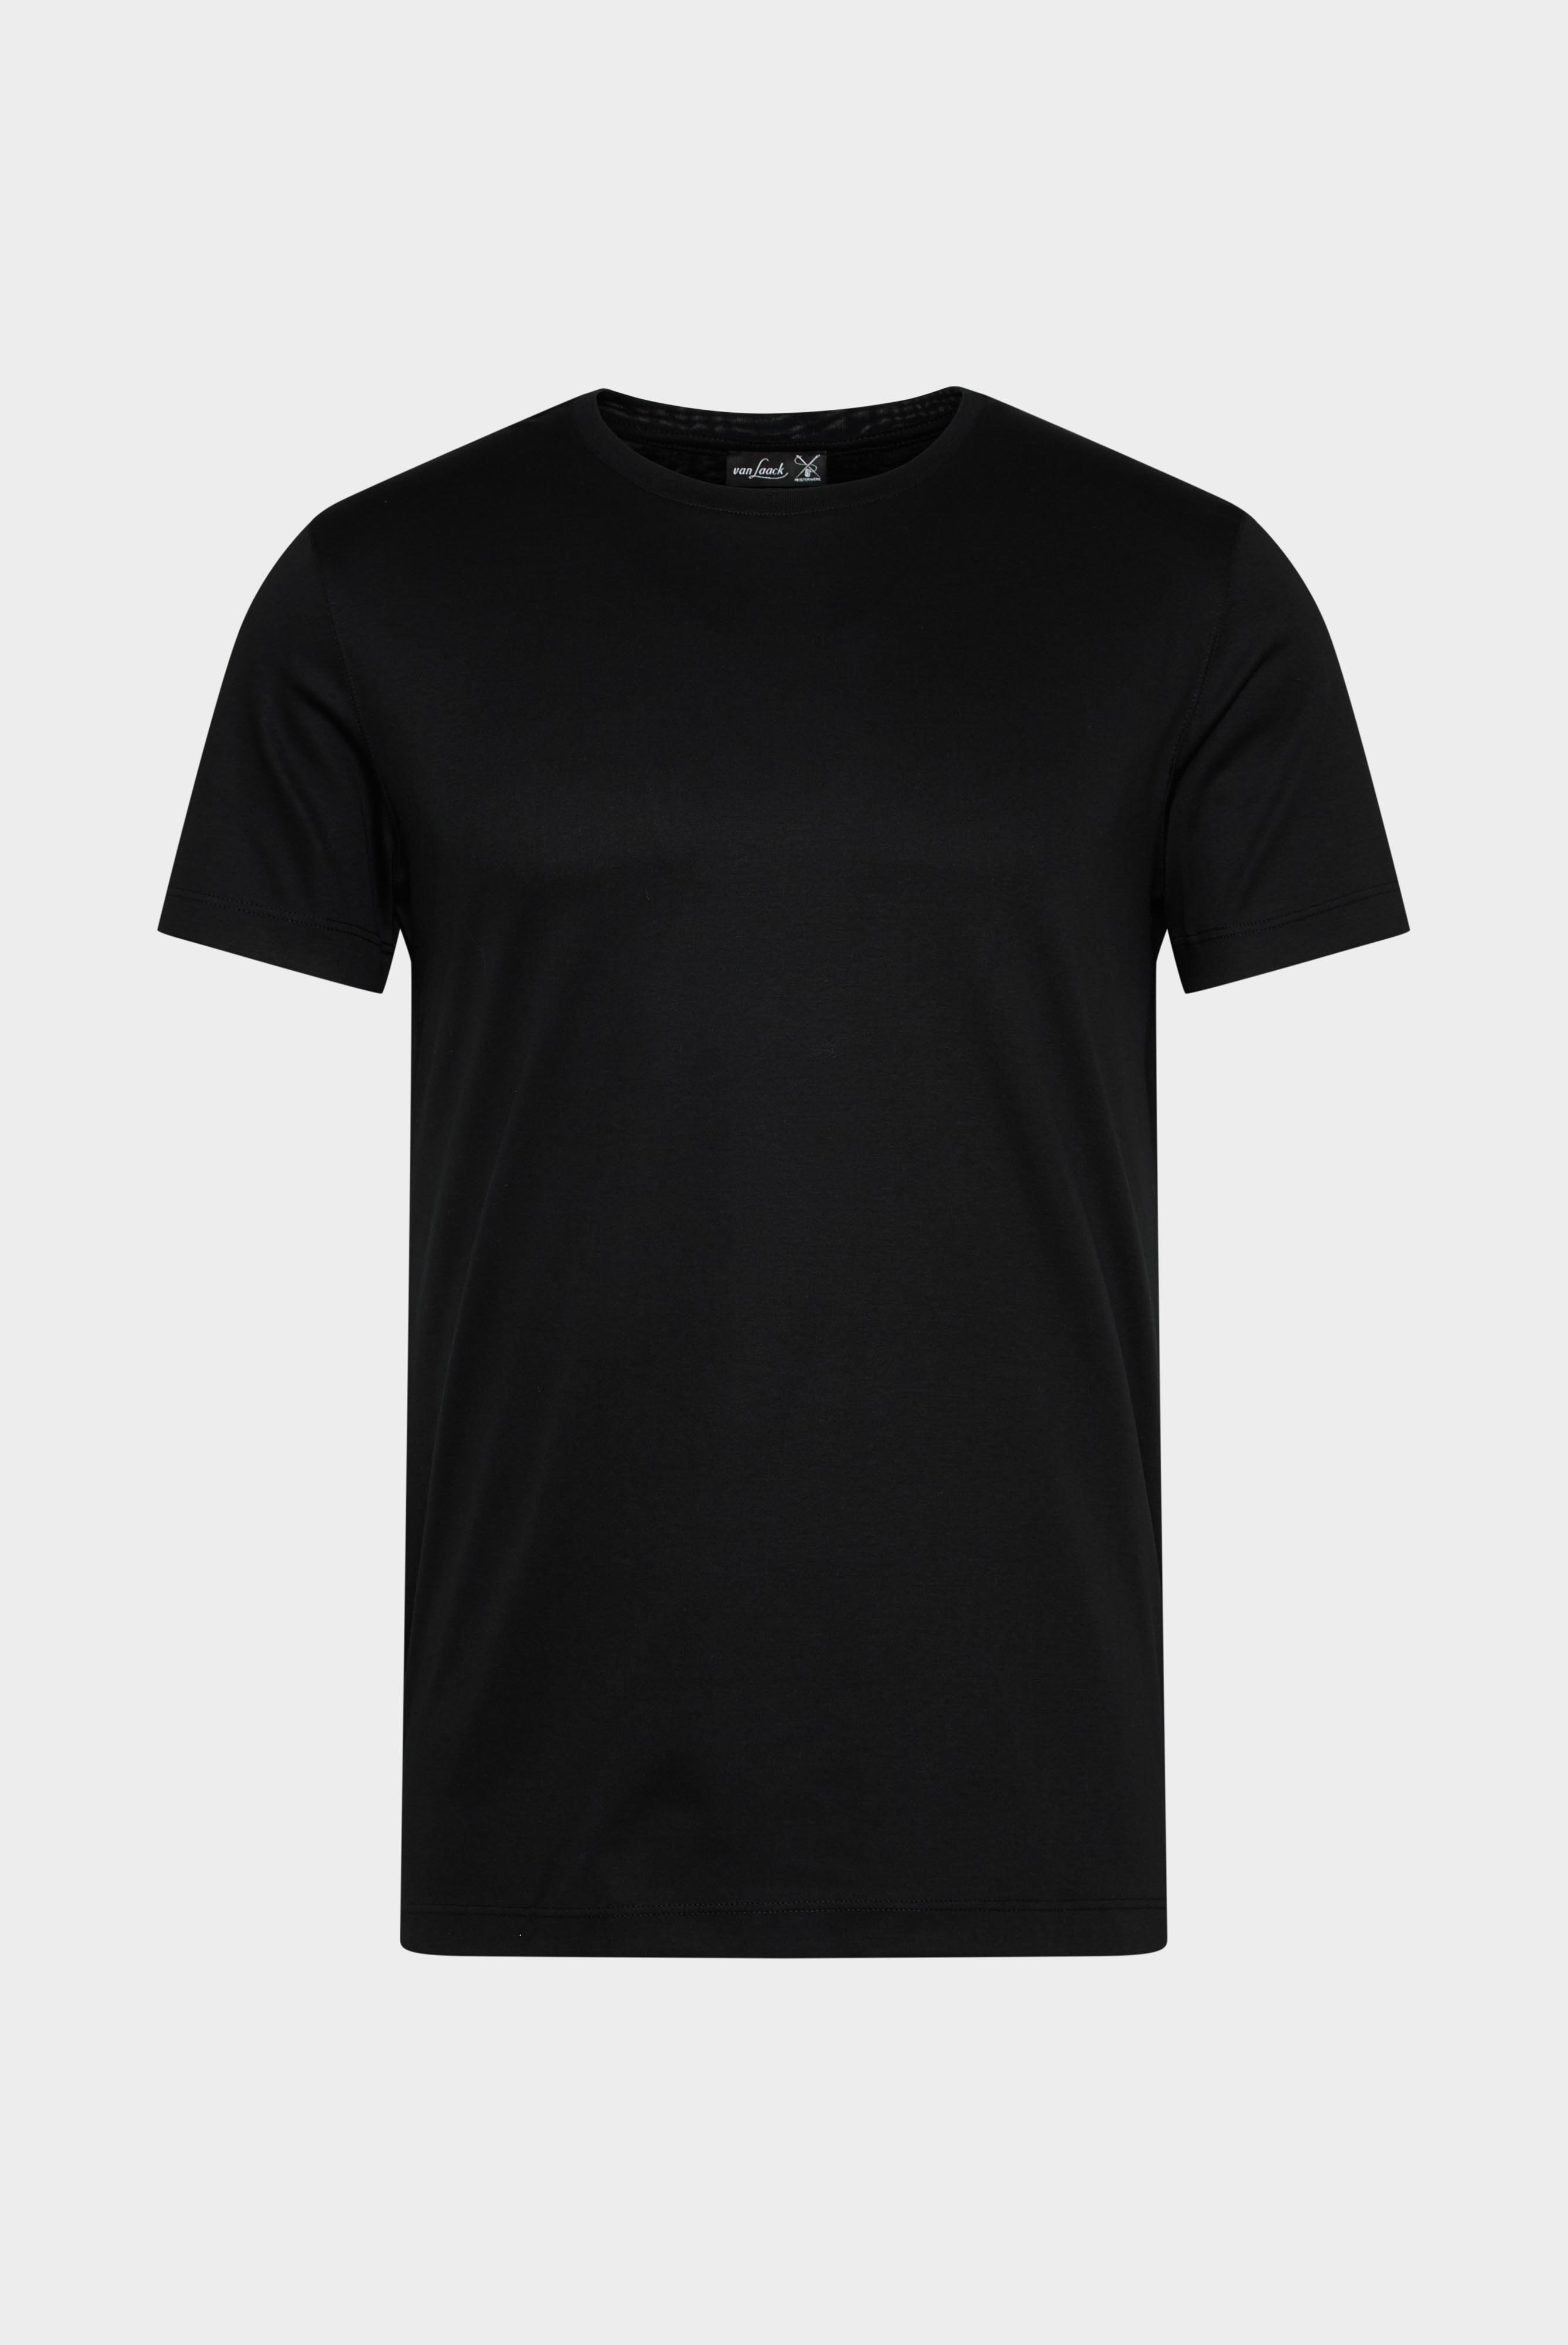 T-Shirts+Swiss Cotton Jersey Crew Neck T-Shirt+20.1717.UX.180031.099.XL